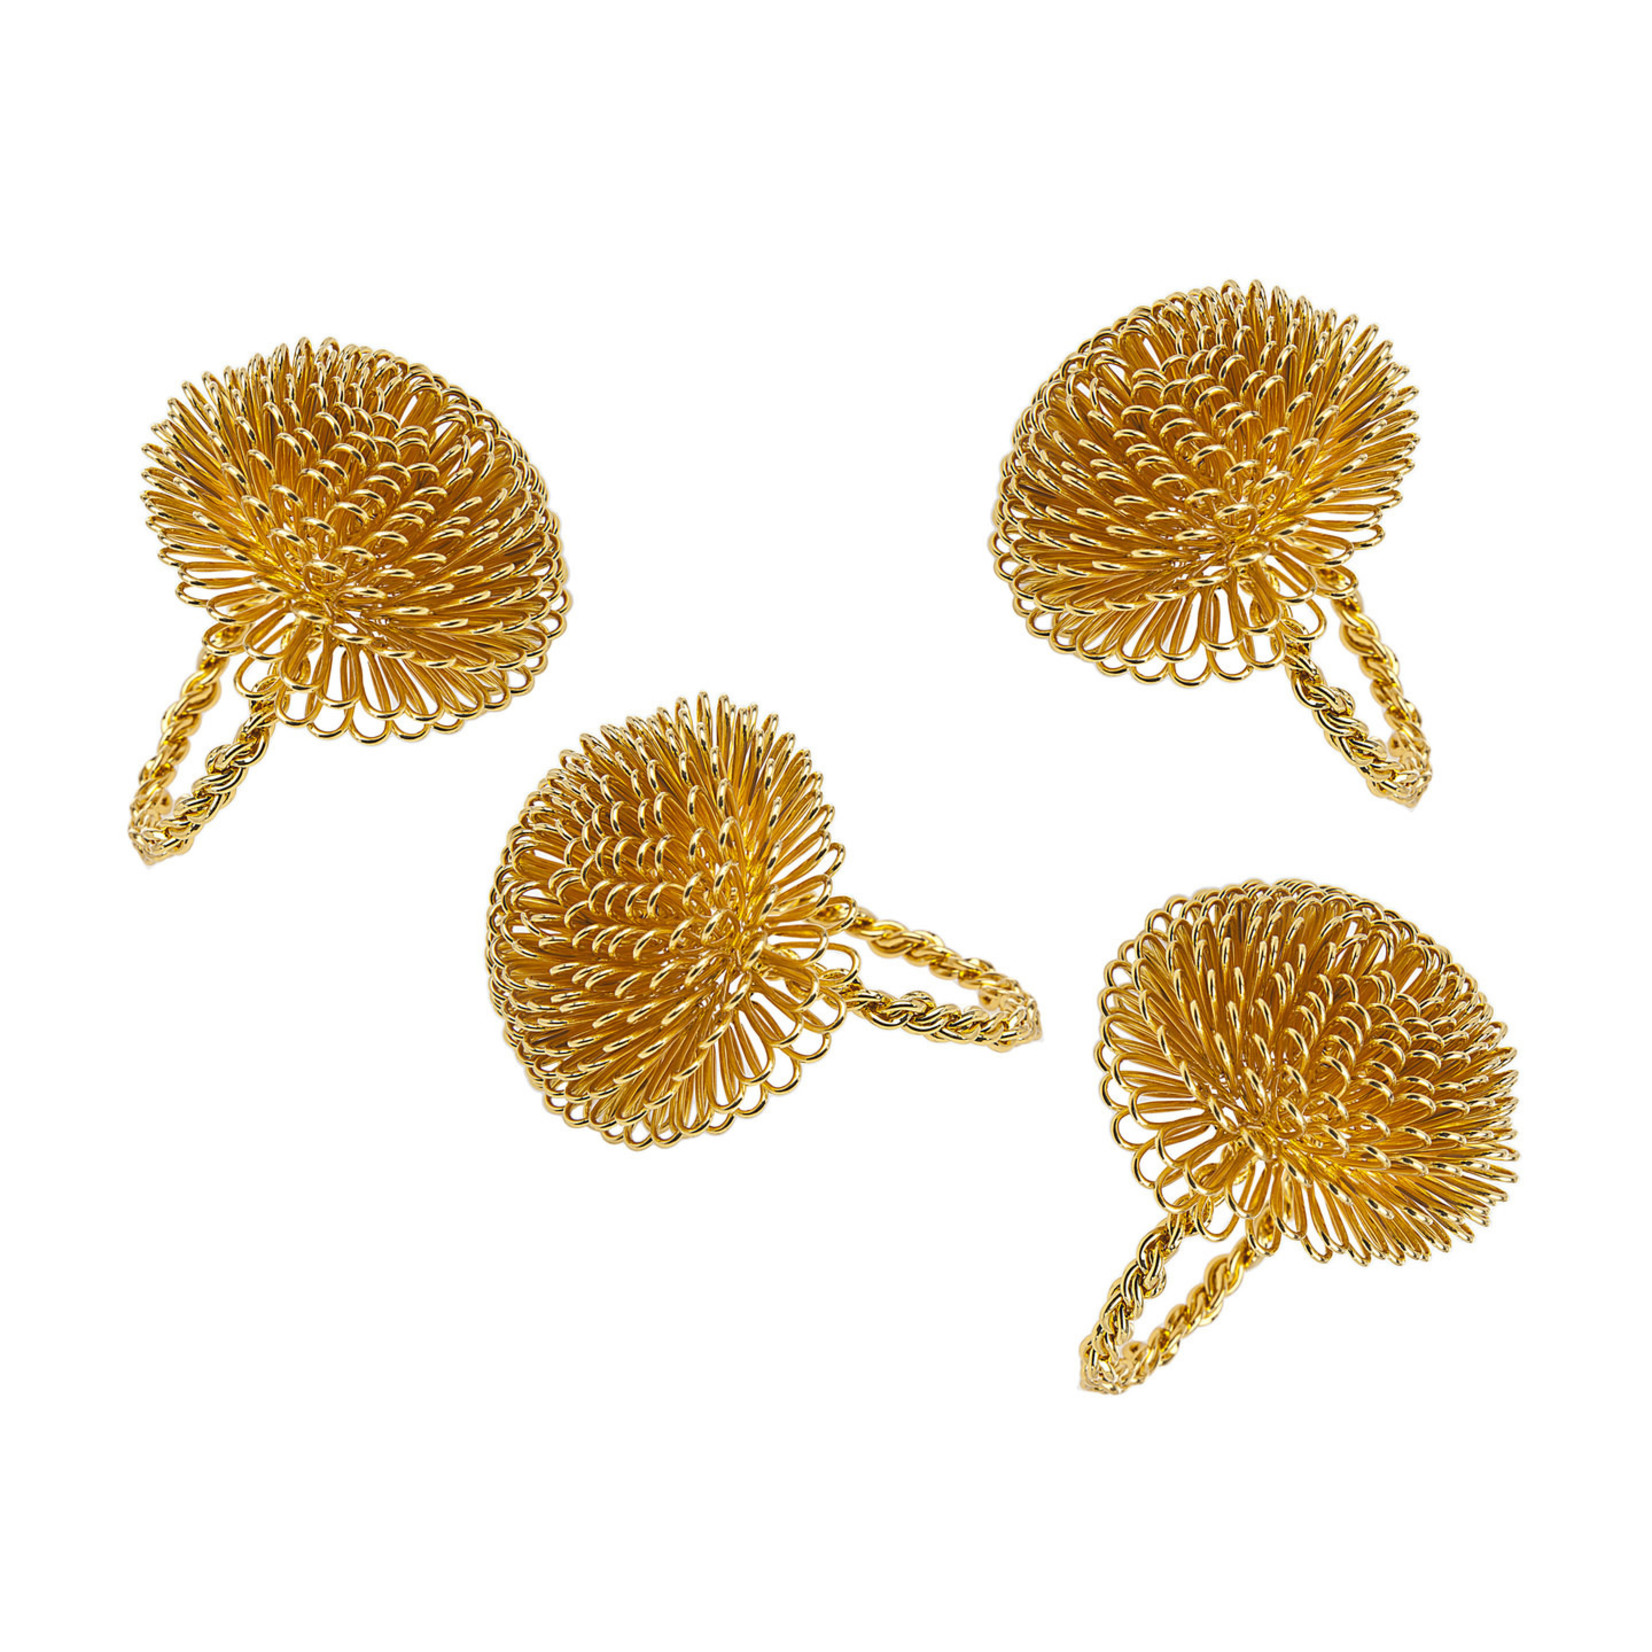 55109  S/4 Gold Aster Napkin Rings